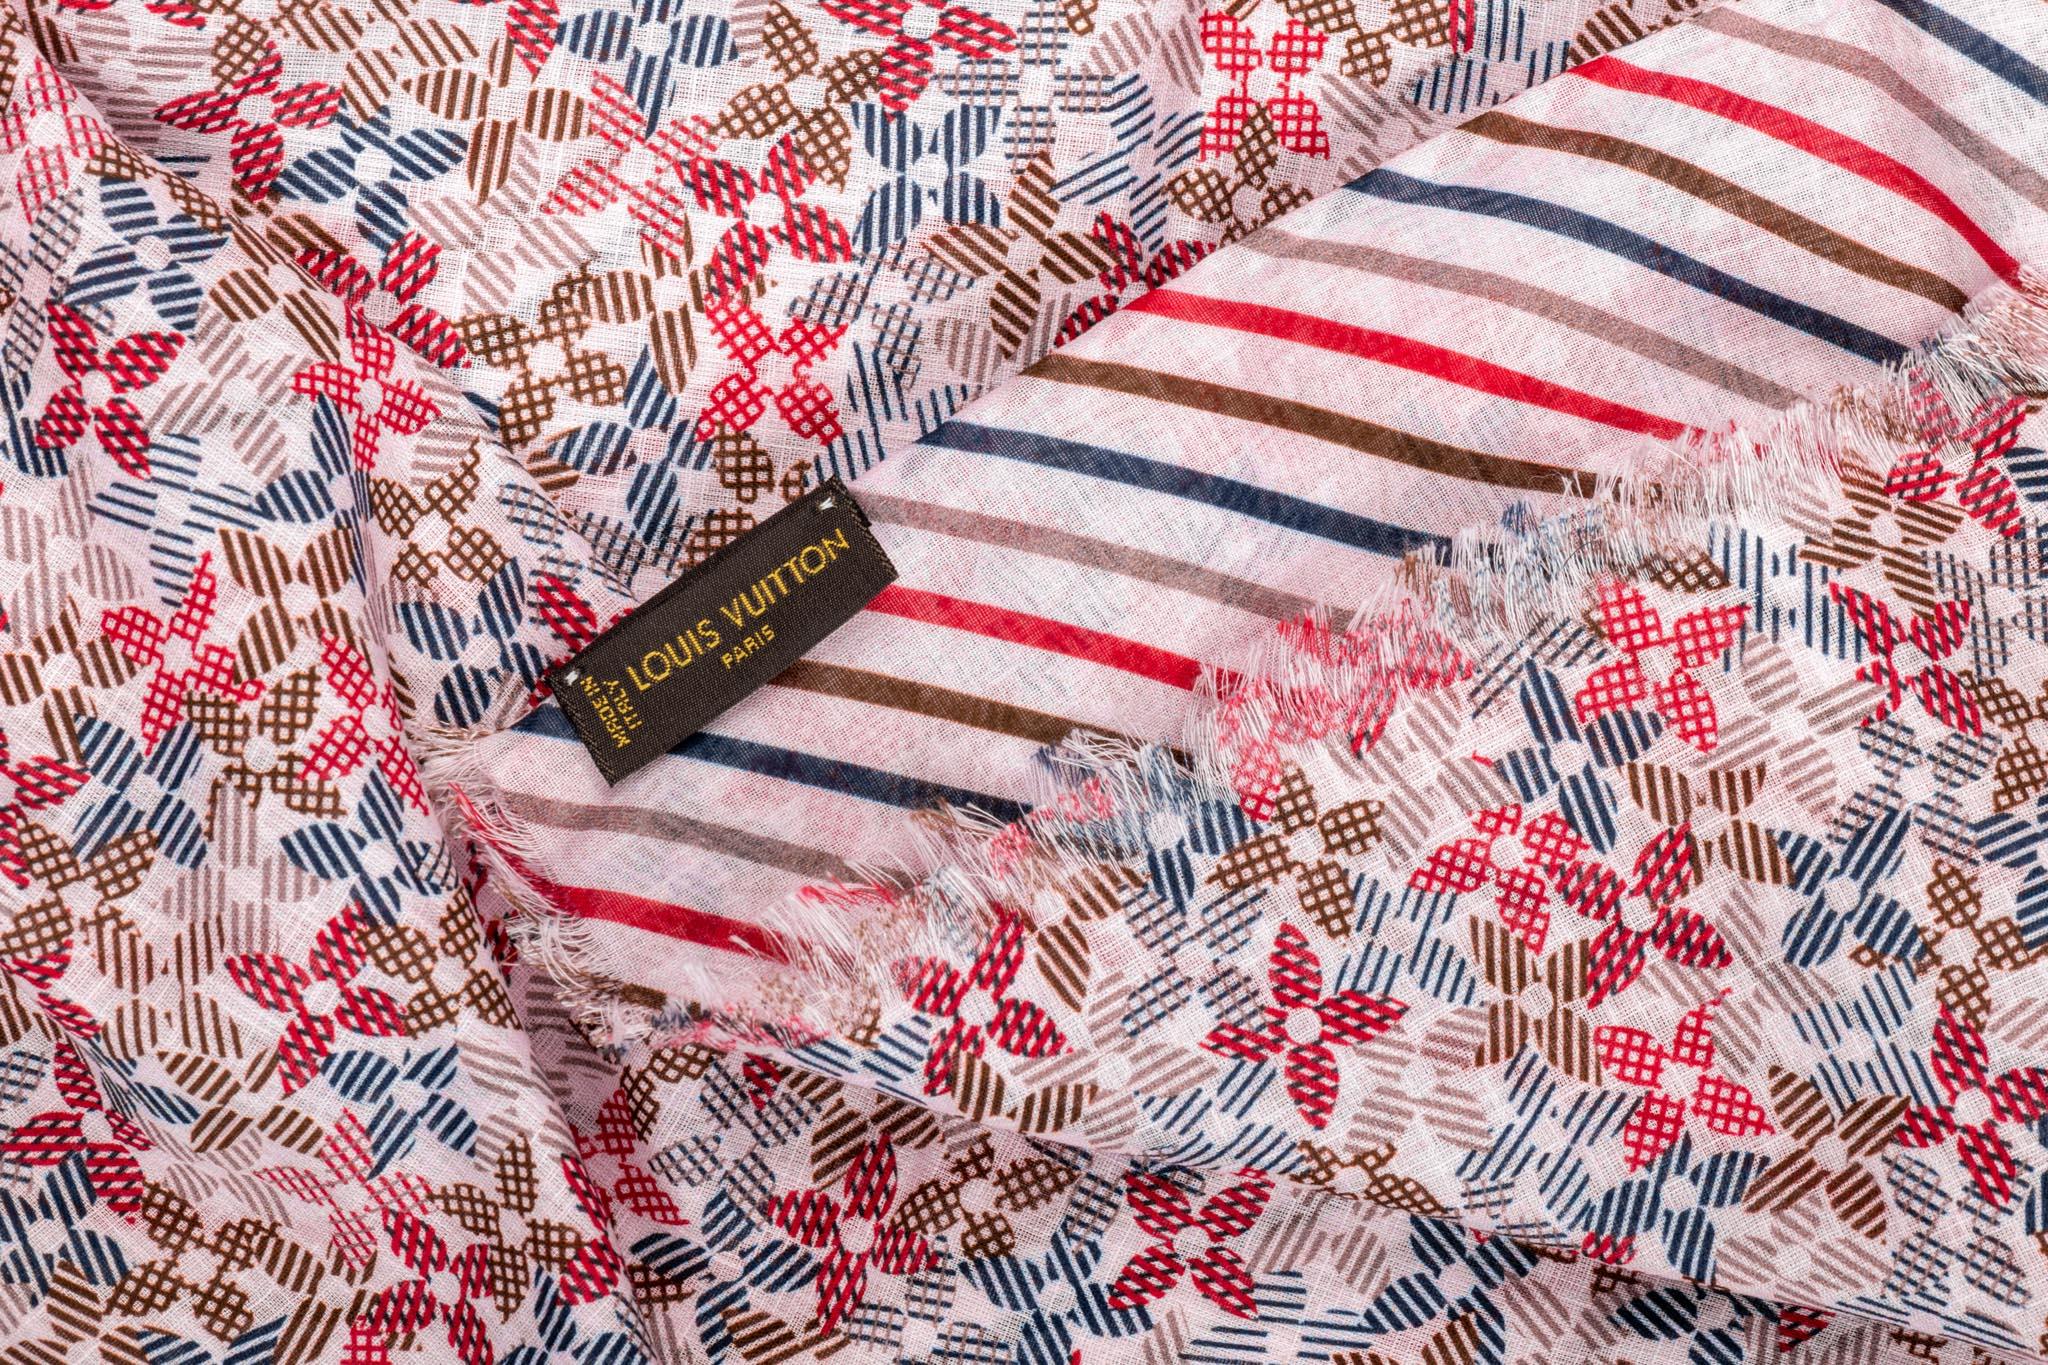 Louis Vuitton double face unisex cotton scarf. Flowers and stripes design. Brand new.